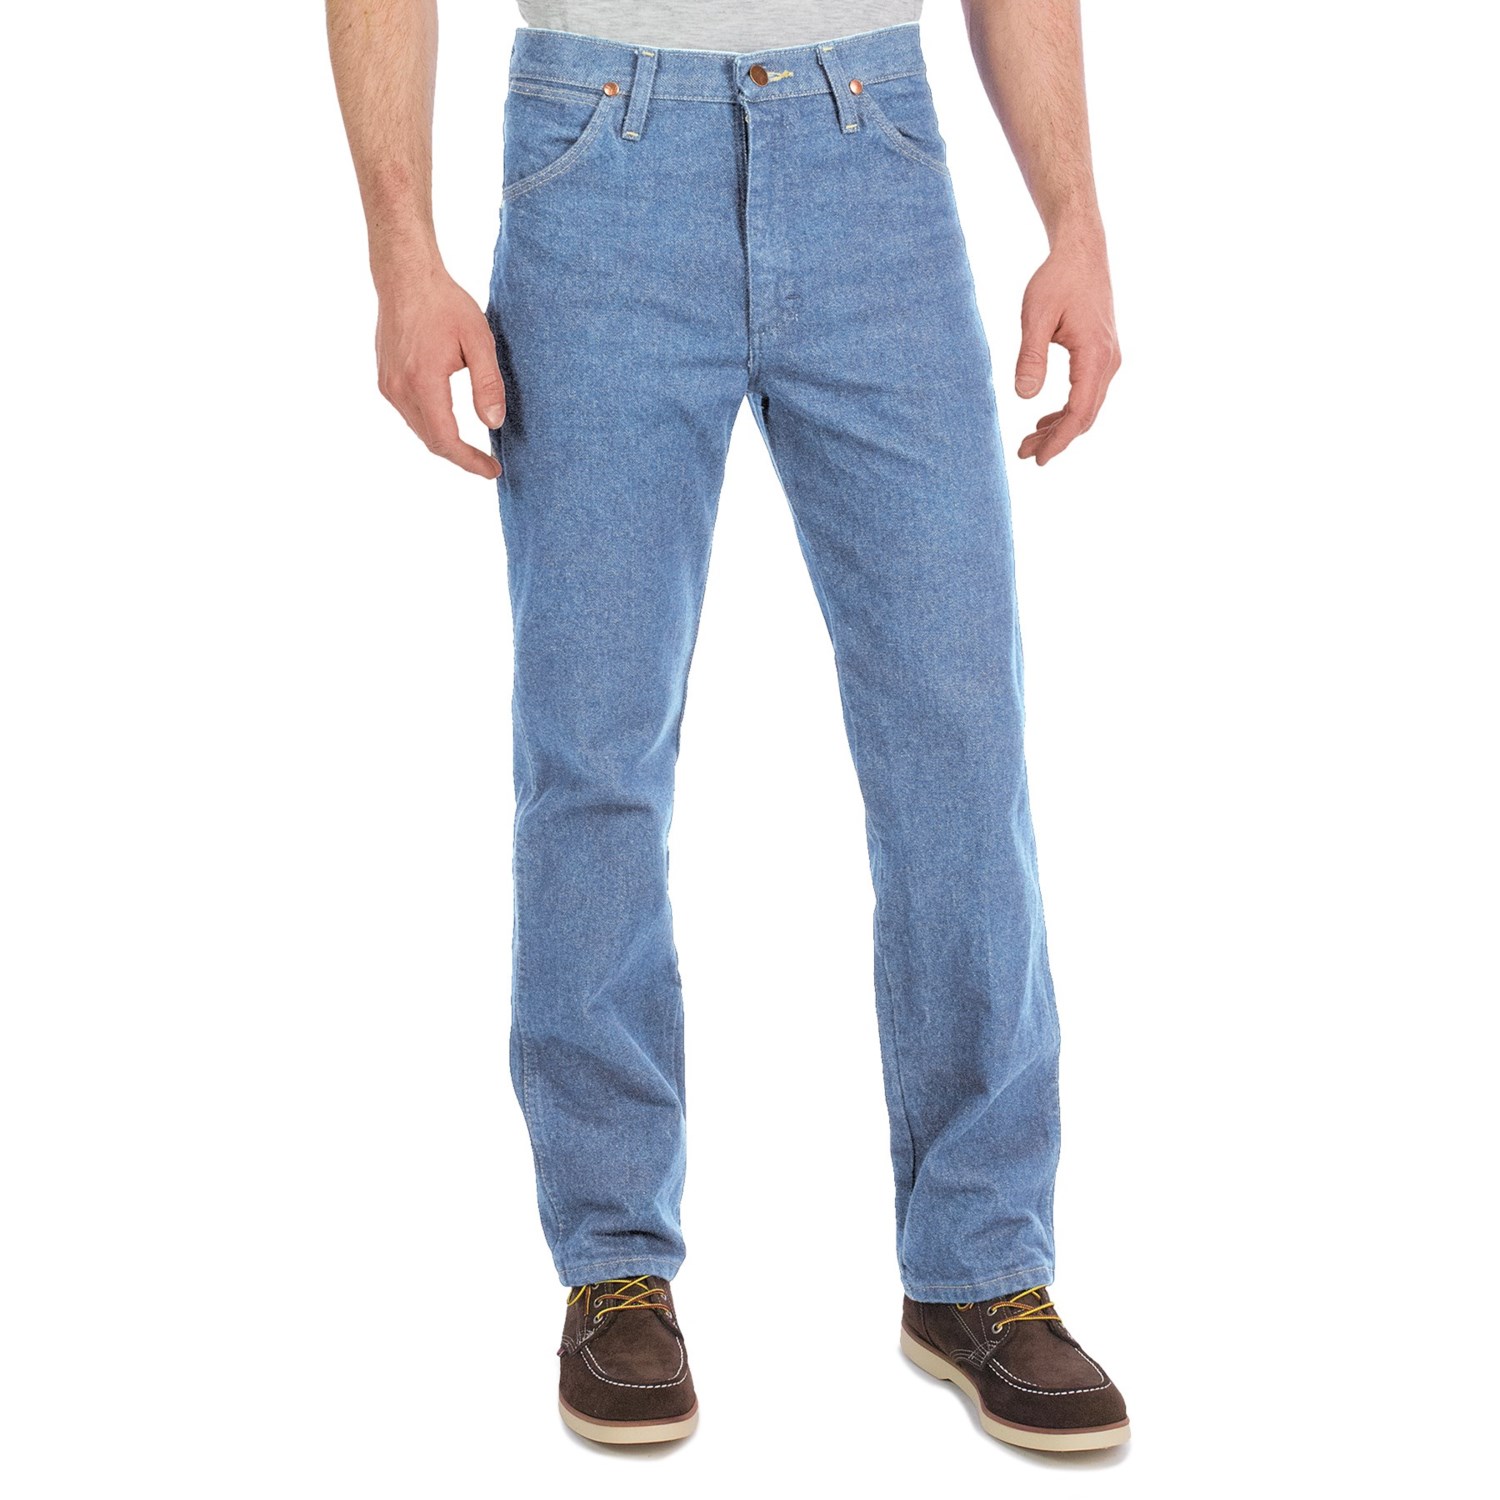 Wrangler Cowboy Cut Slim Fit Jeans (For Men) - Save 39%